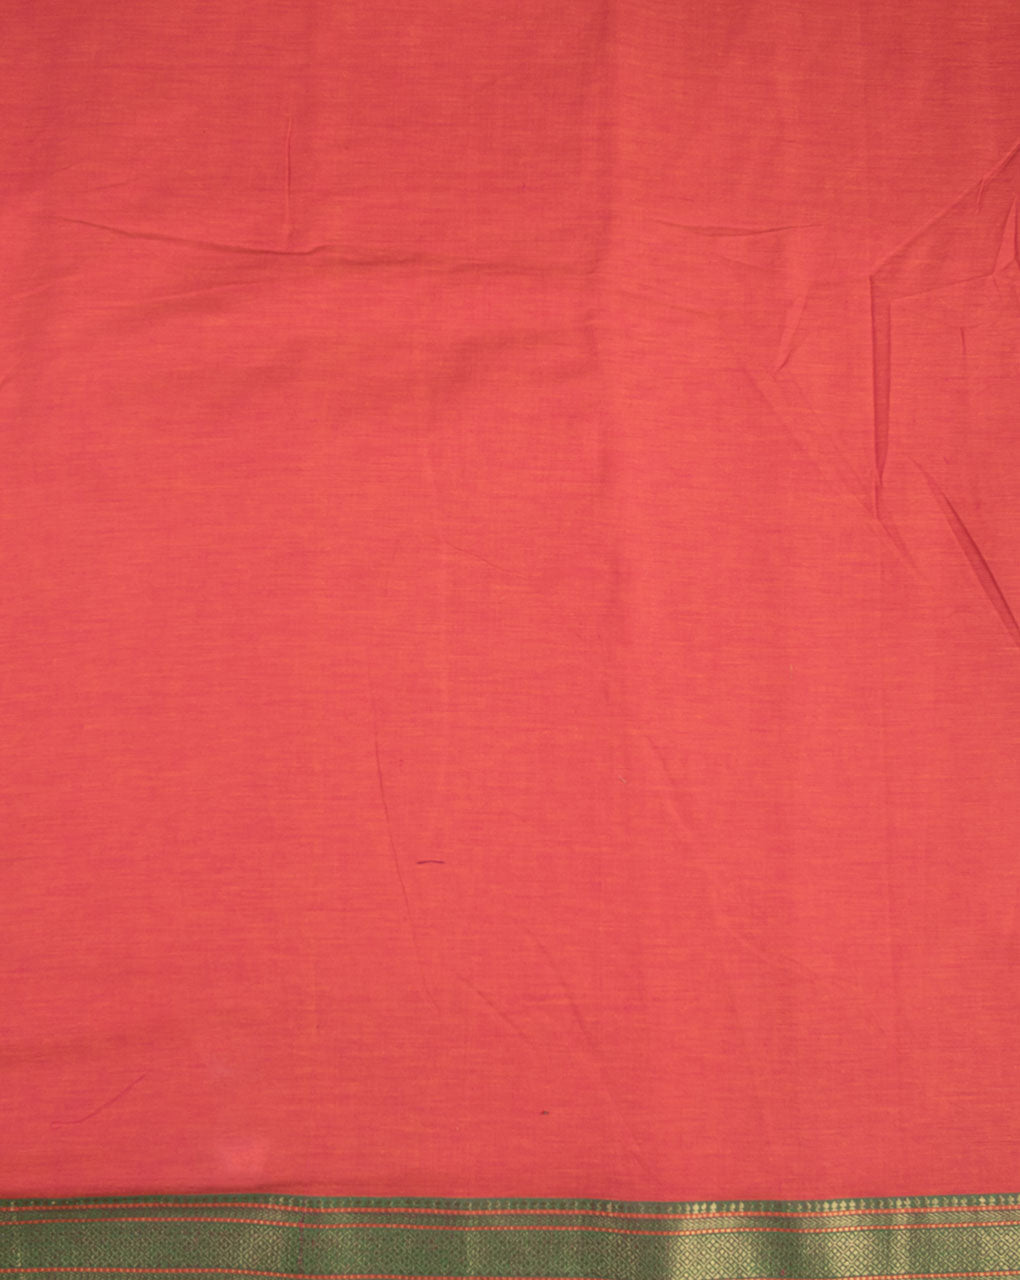 Crimson Red Mangalgiri Zari Border Loom Textured Cotton Fabric - Fabriclore.com